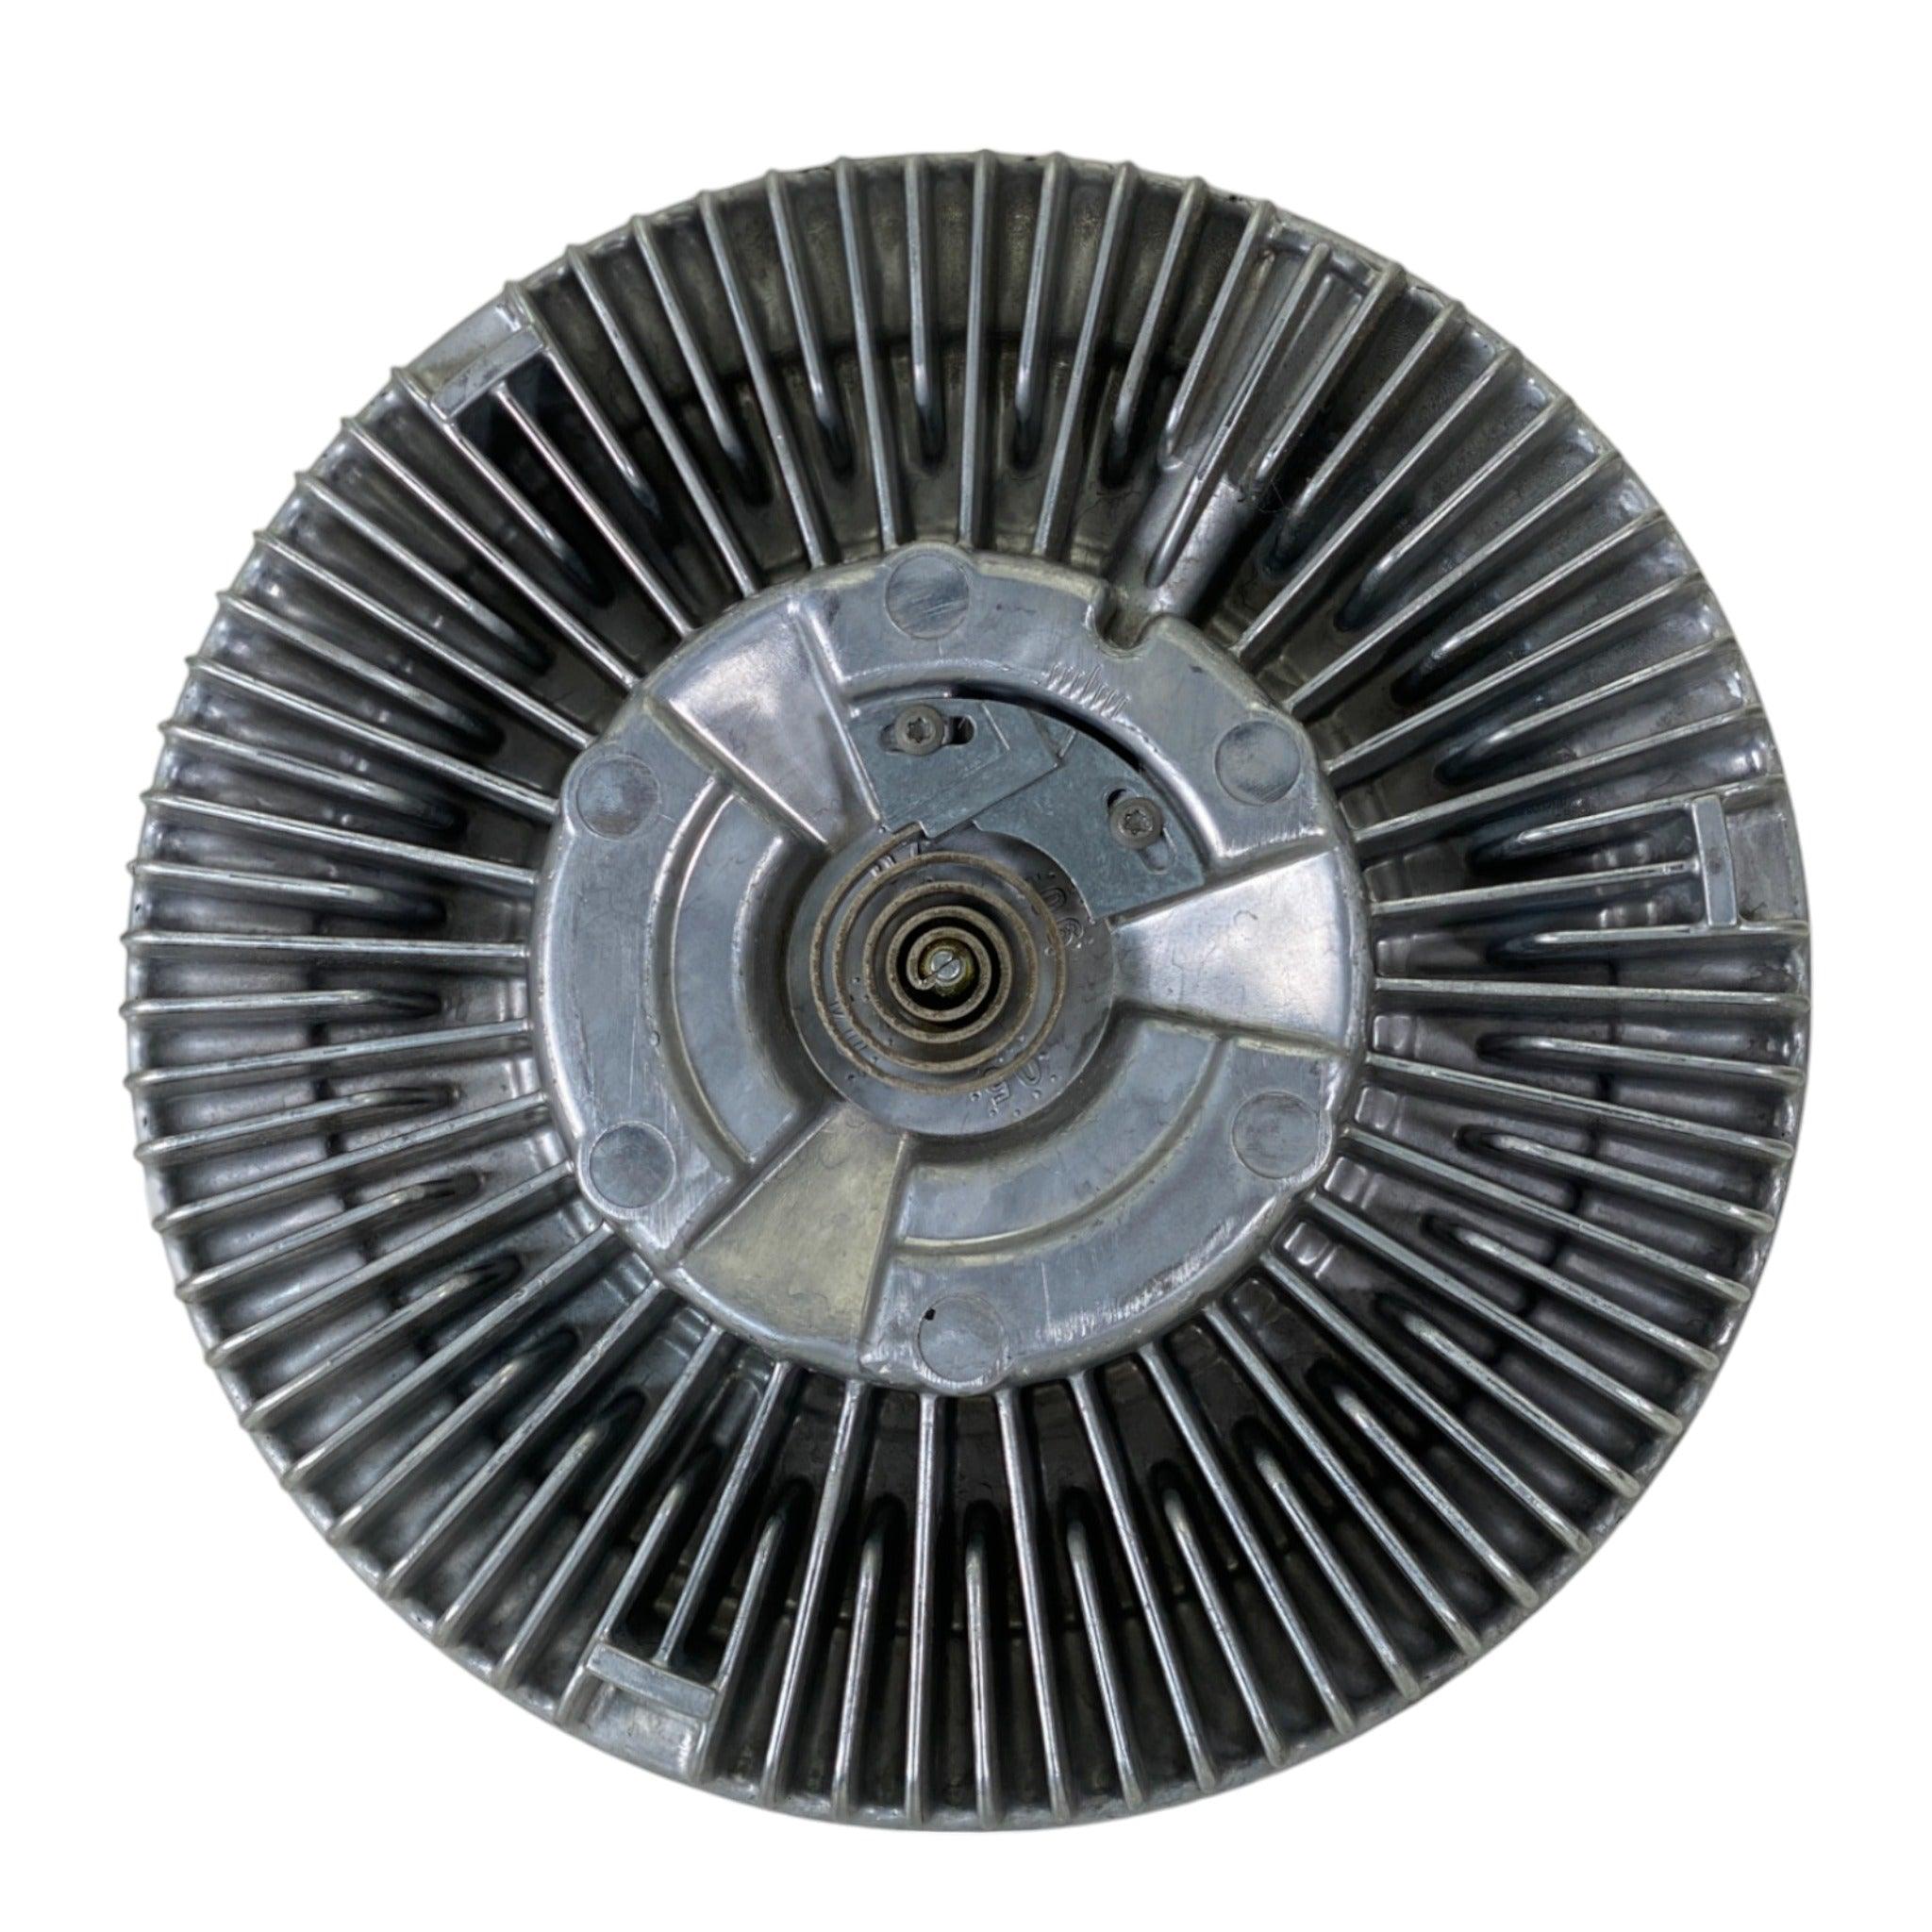 2601975C1 Genuine International Engine Fan Clutch For Dt466 Series Engines - ADVANCED TRUCK PARTS